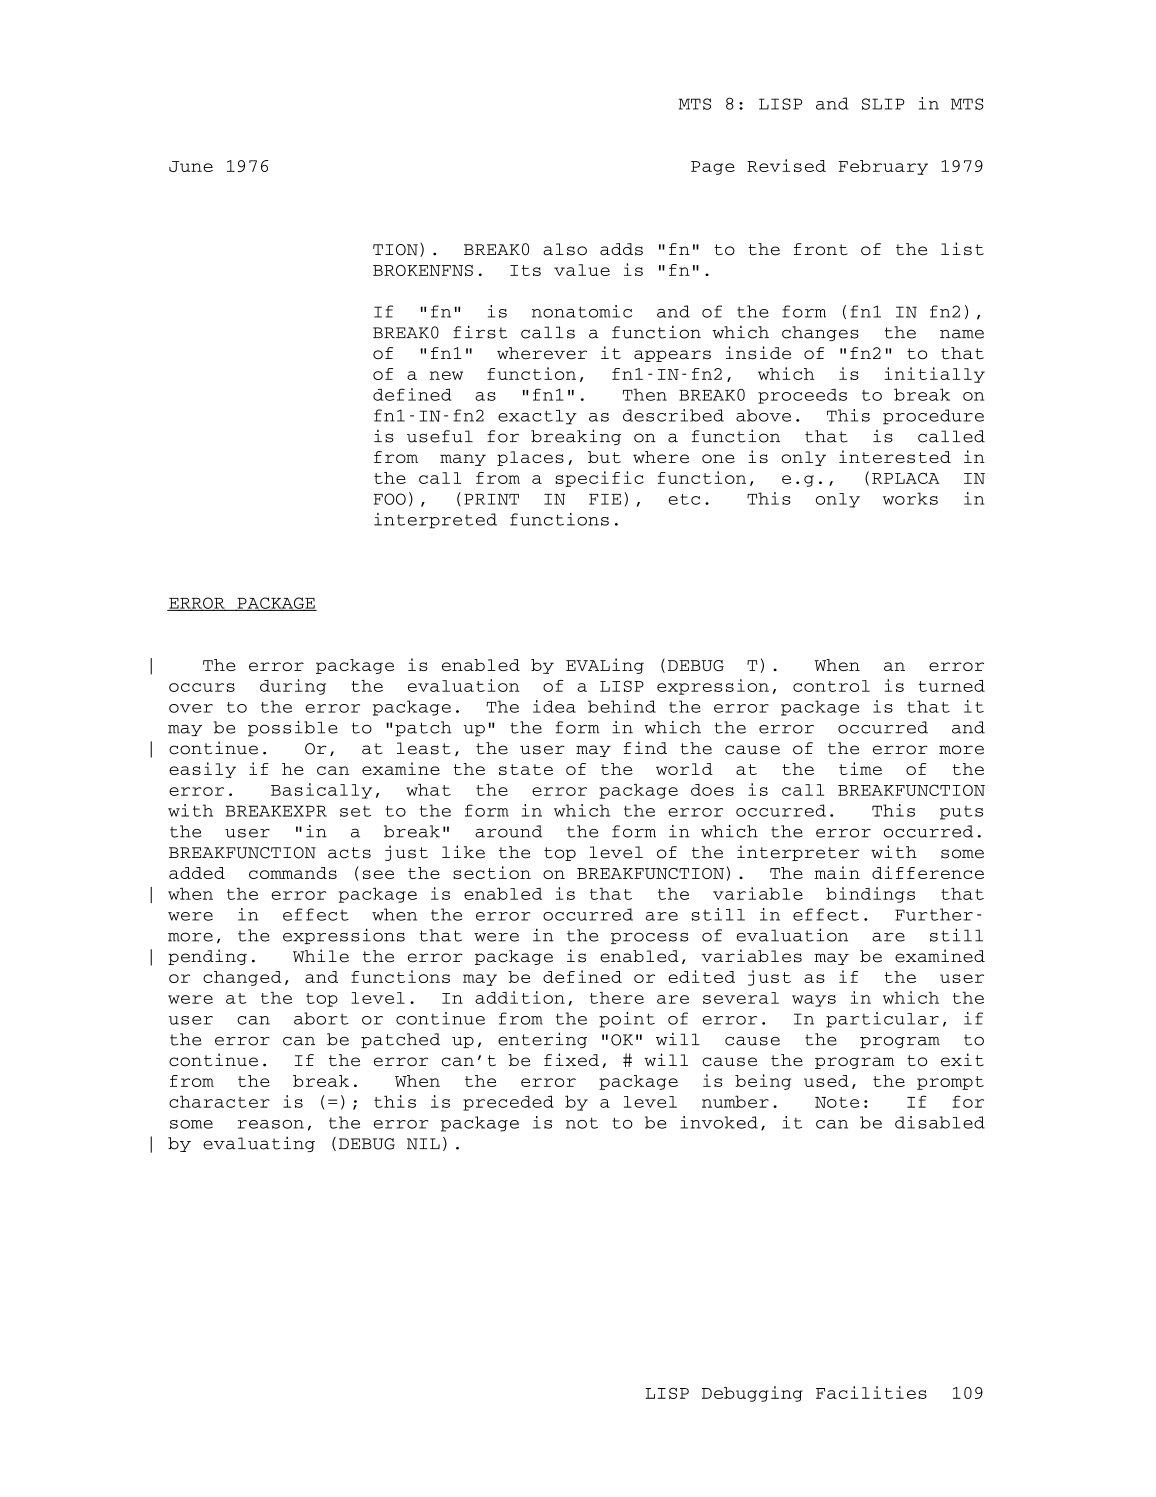 MTS Volume 8 - LISP and SLIP page 108